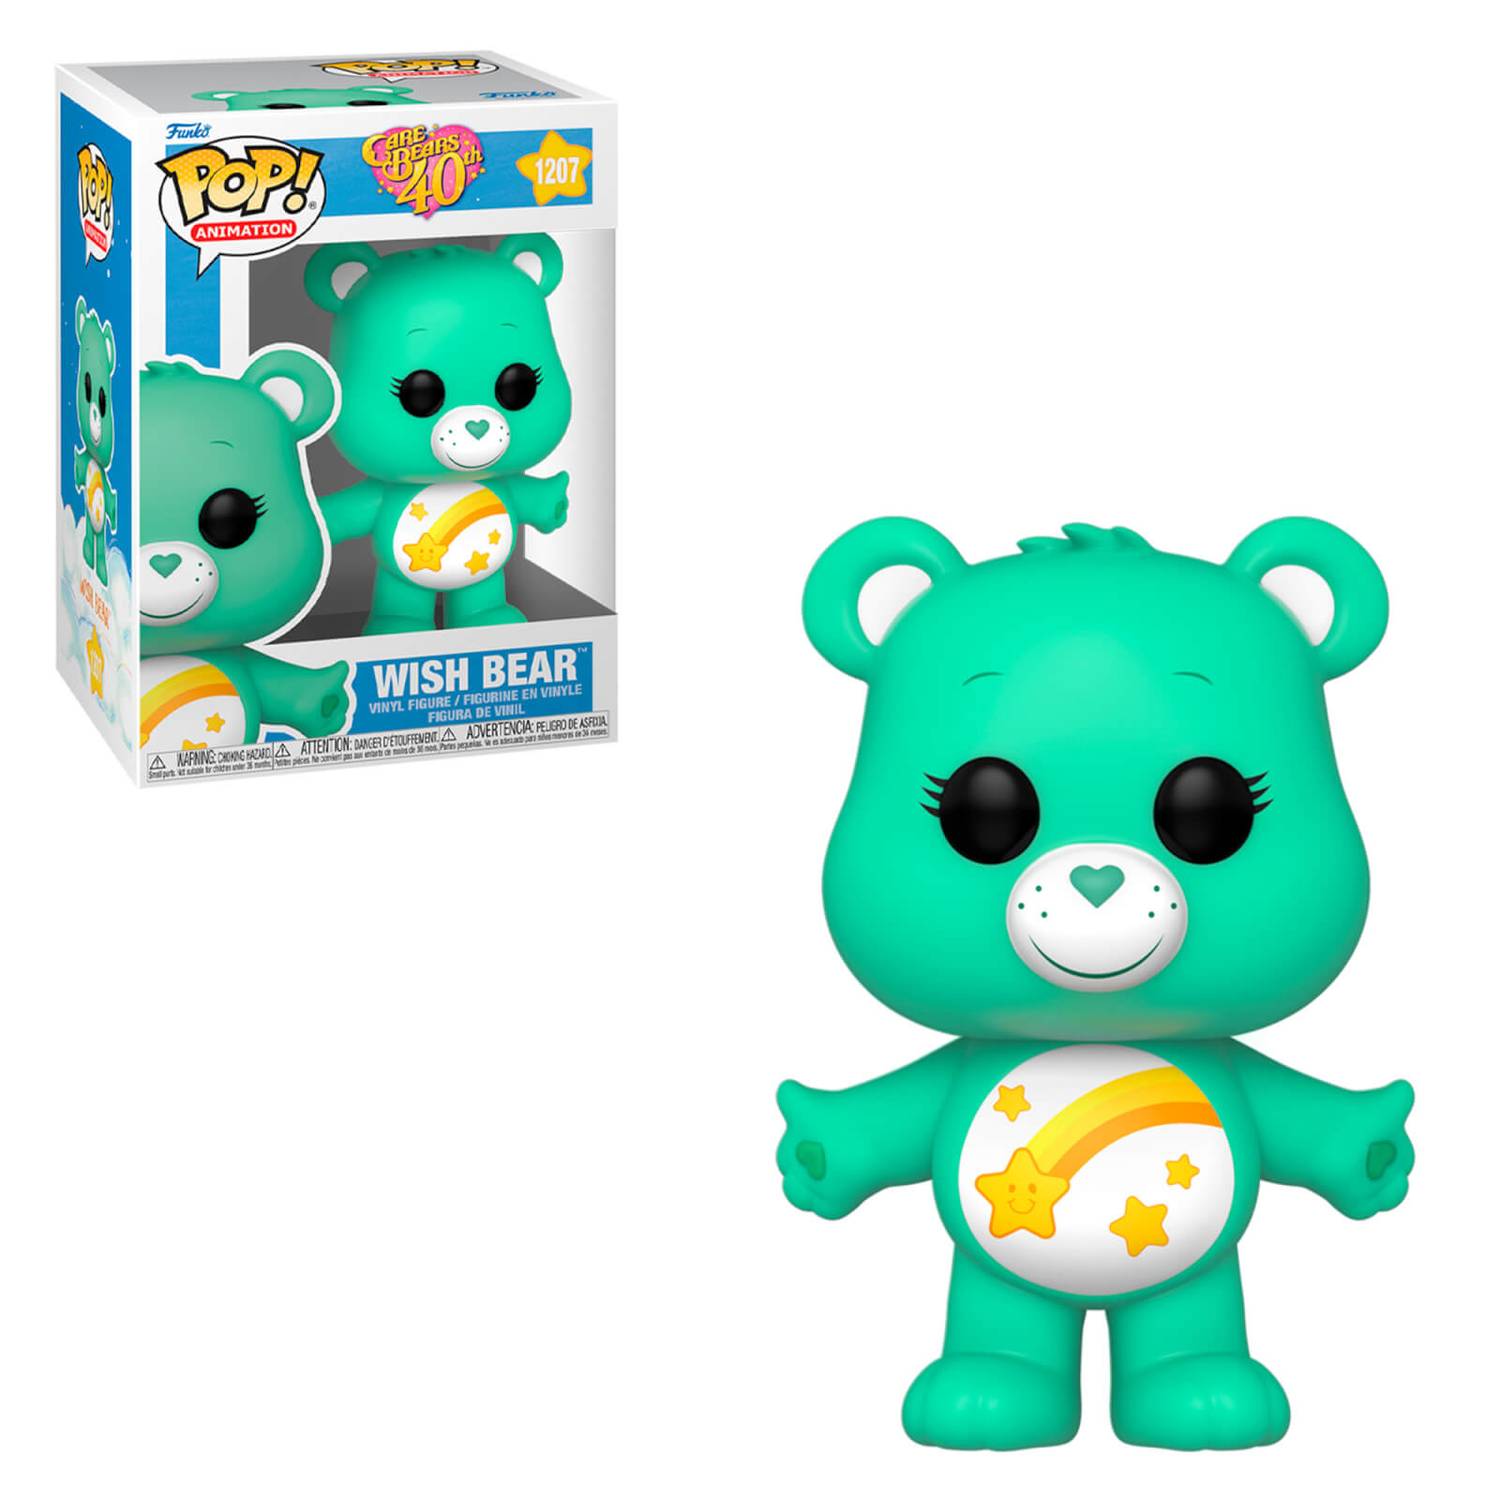 Care Bears TV Series 40th Anniversary Wish Bear POP Figure Toy #1207 FUNKO  NIB